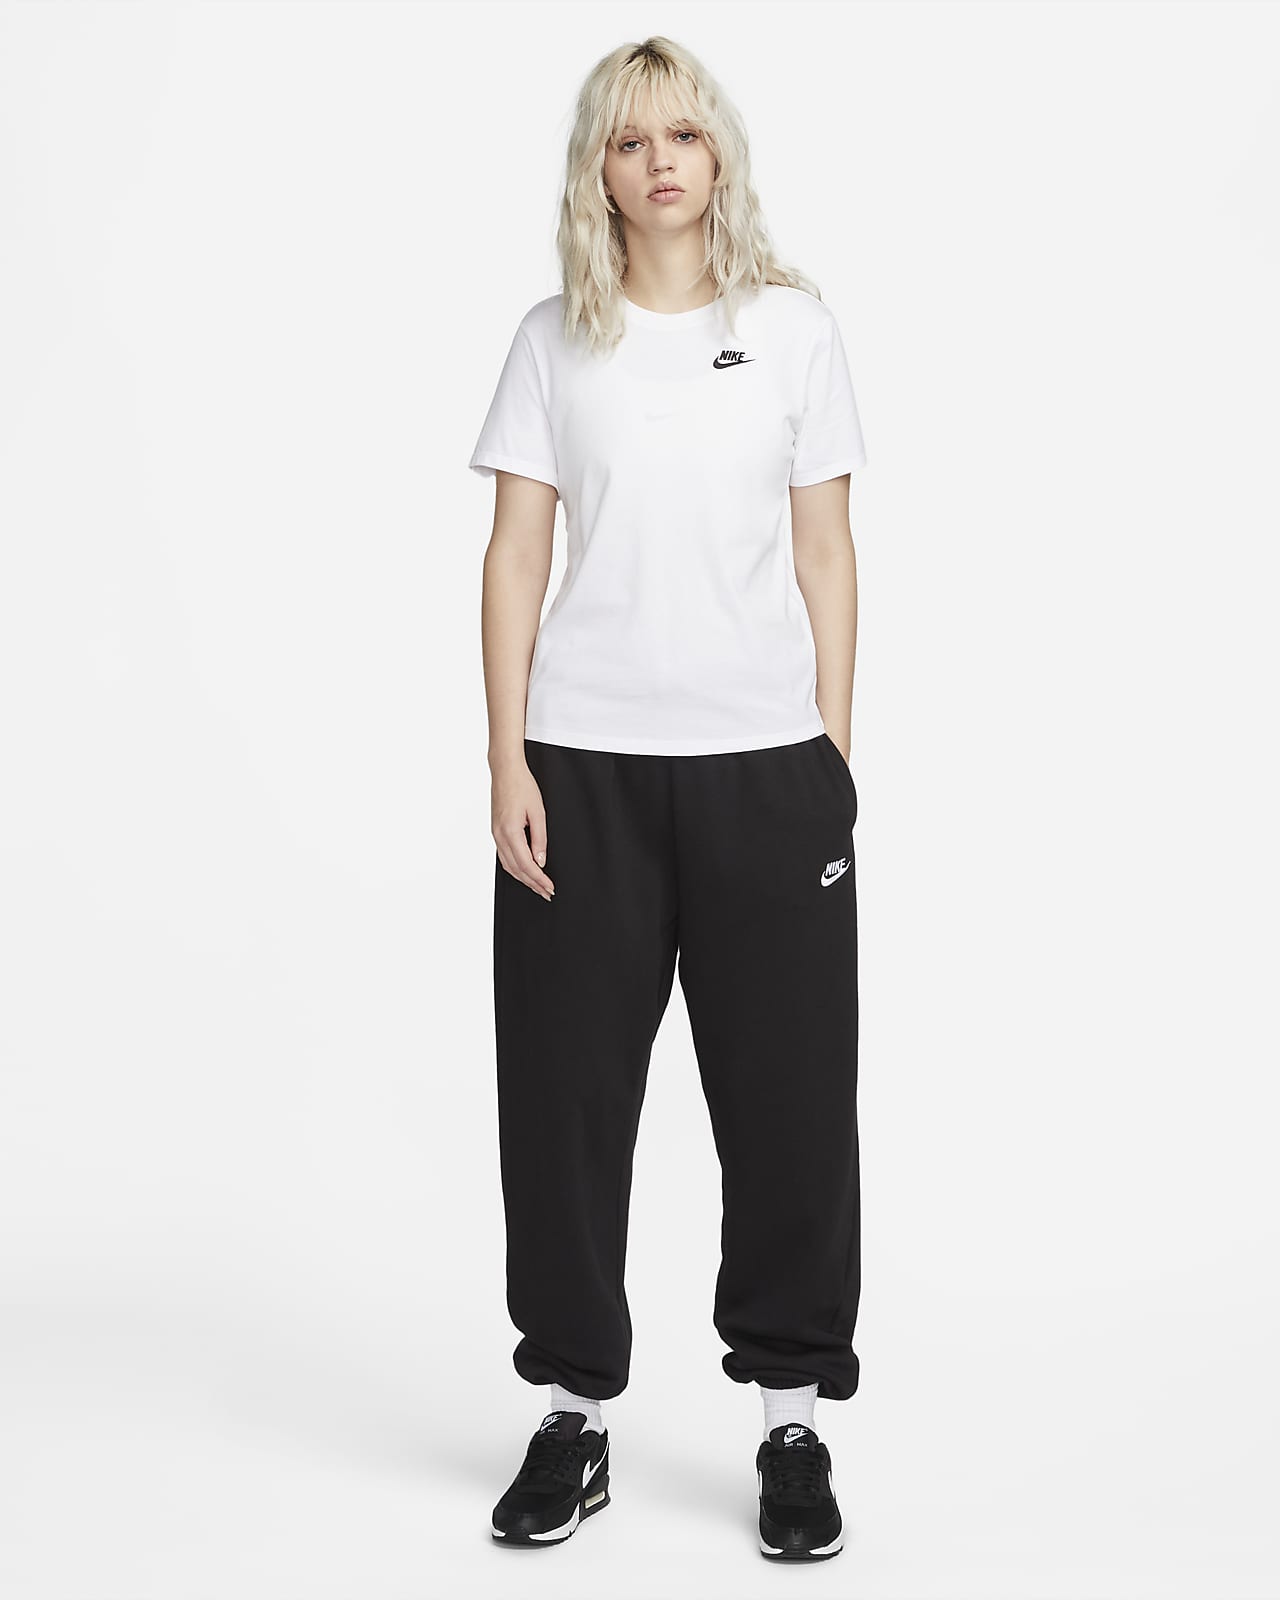 Nike Sportswear Essentials Women's T-Shirt. LU